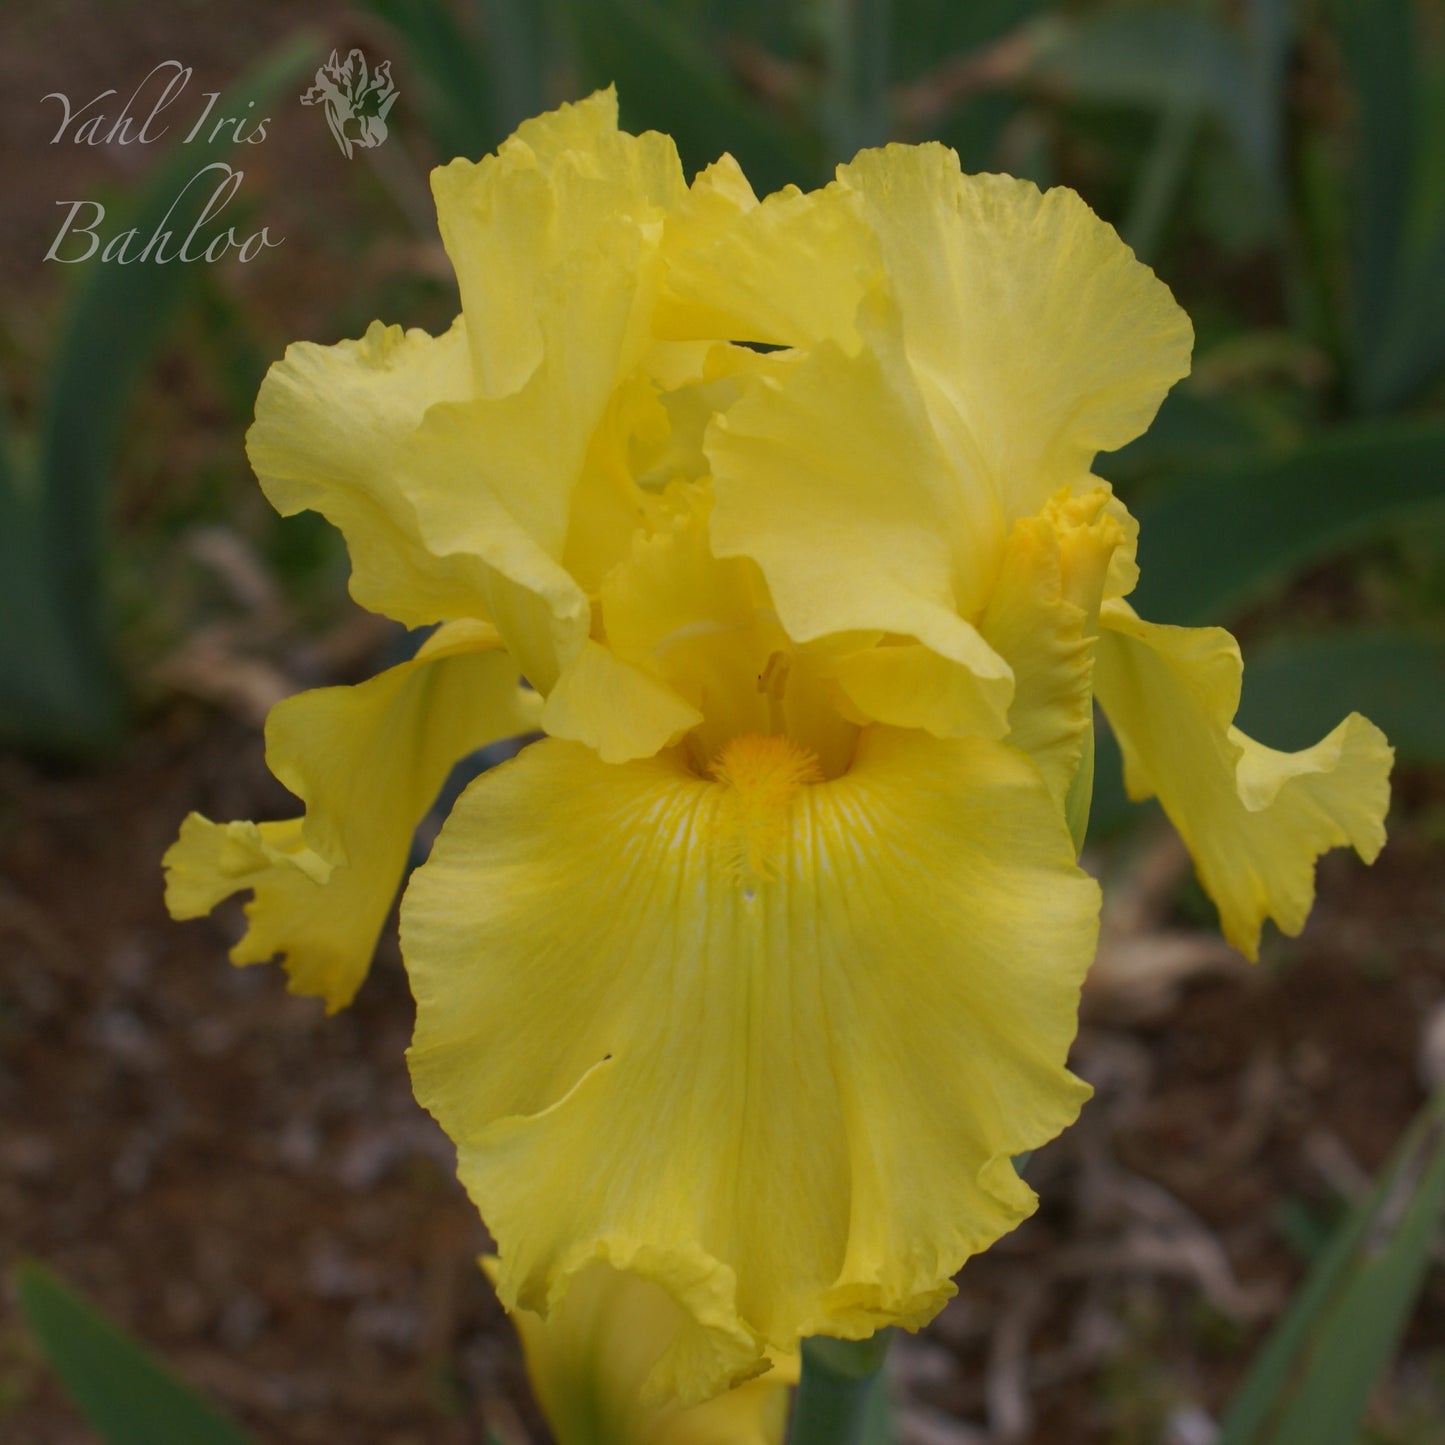 Bahloo - Tall bearded iris